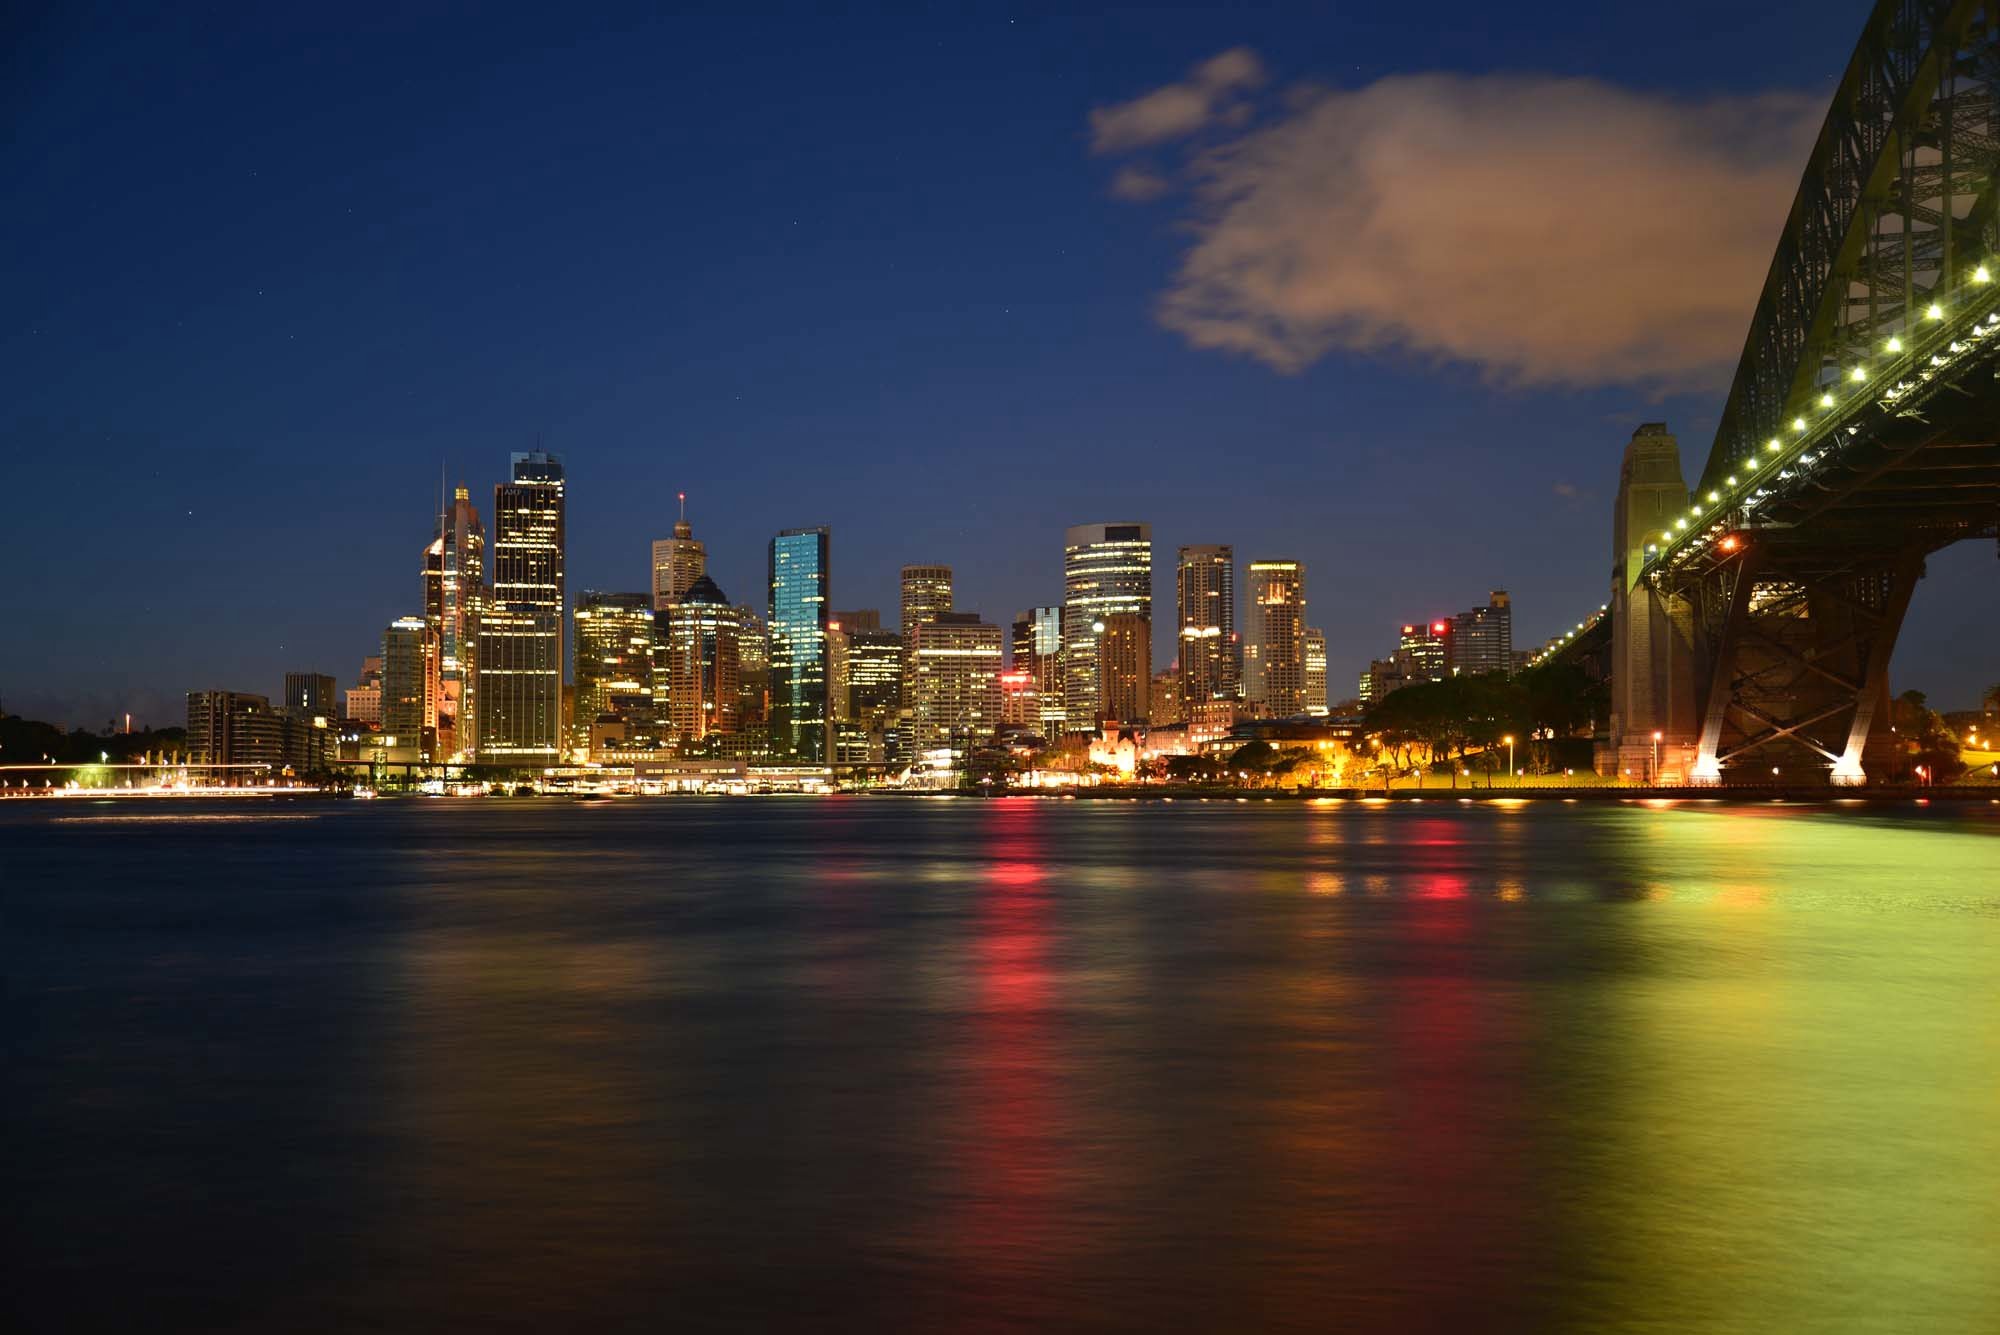 Milsons point em Sydney, Australia -Fonte Pexels